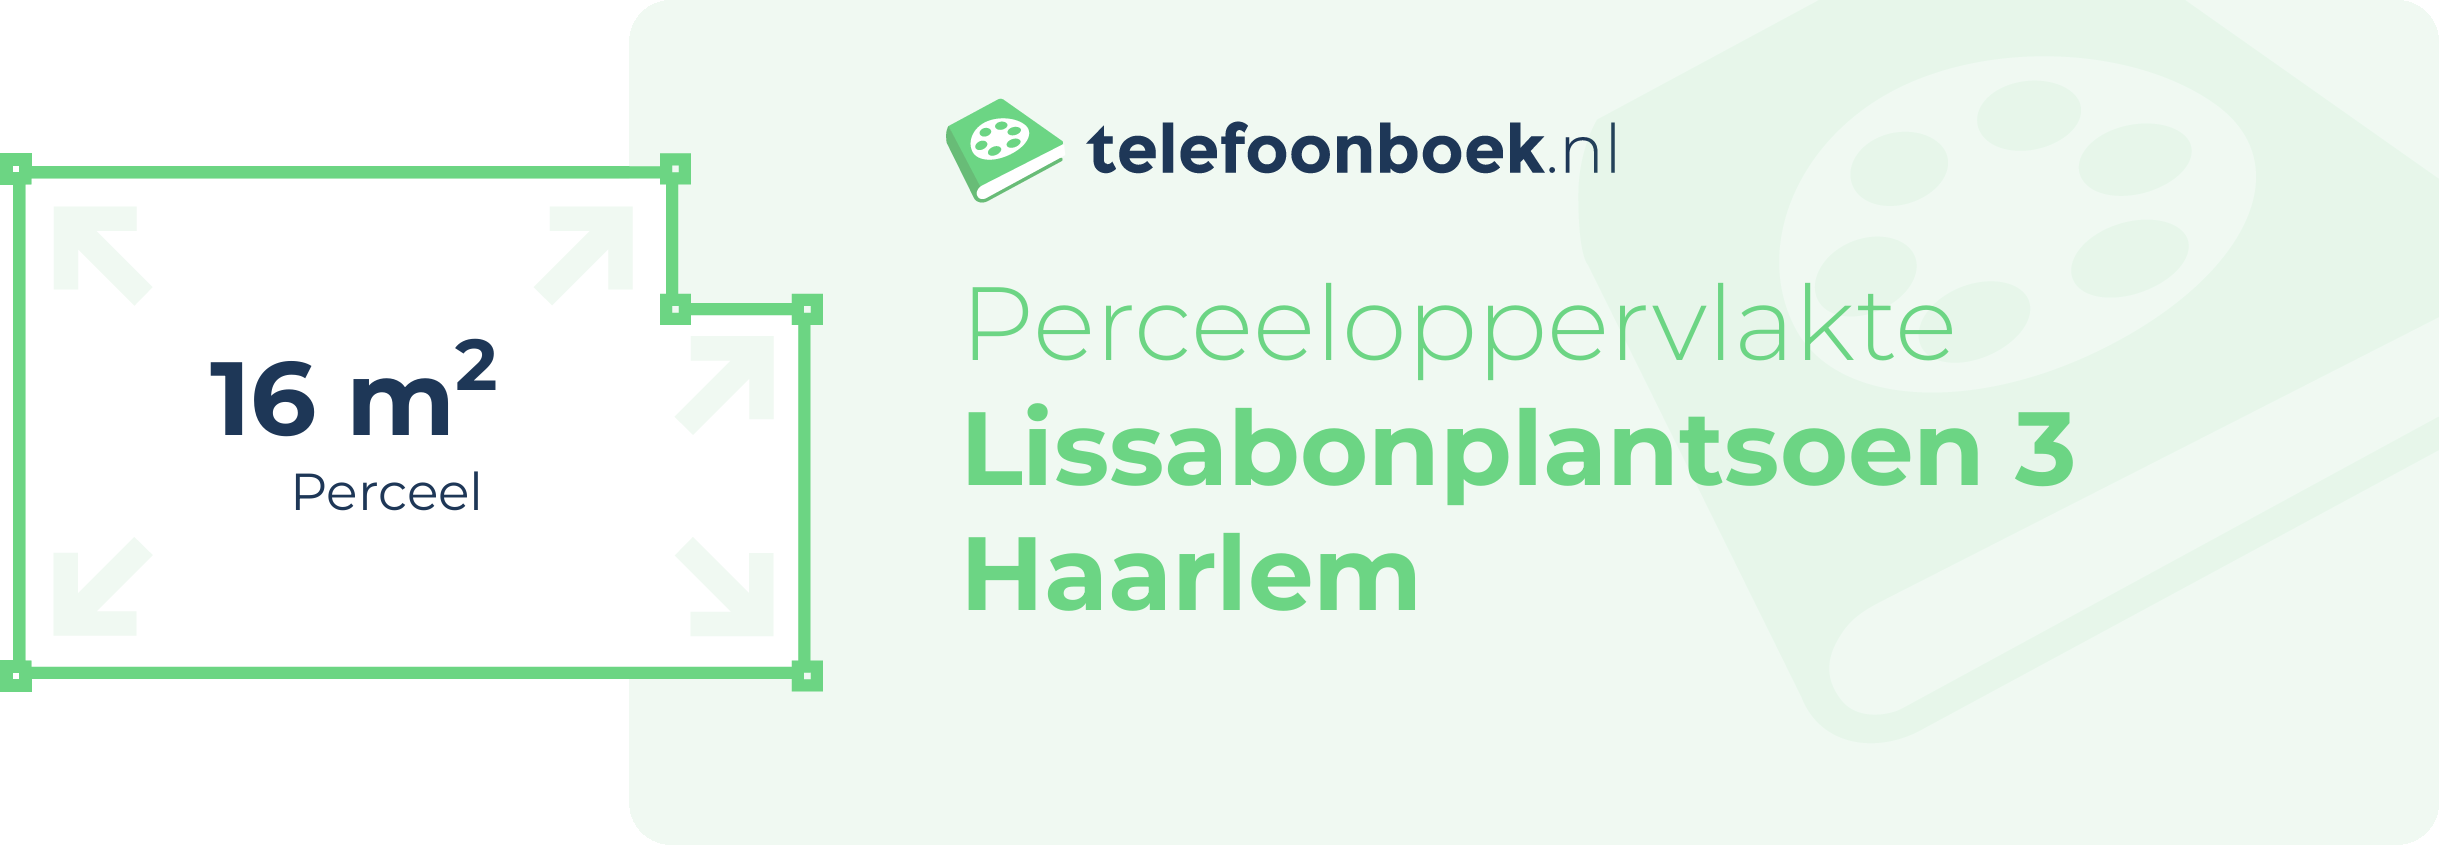 Perceeloppervlakte Lissabonplantsoen 3 Haarlem